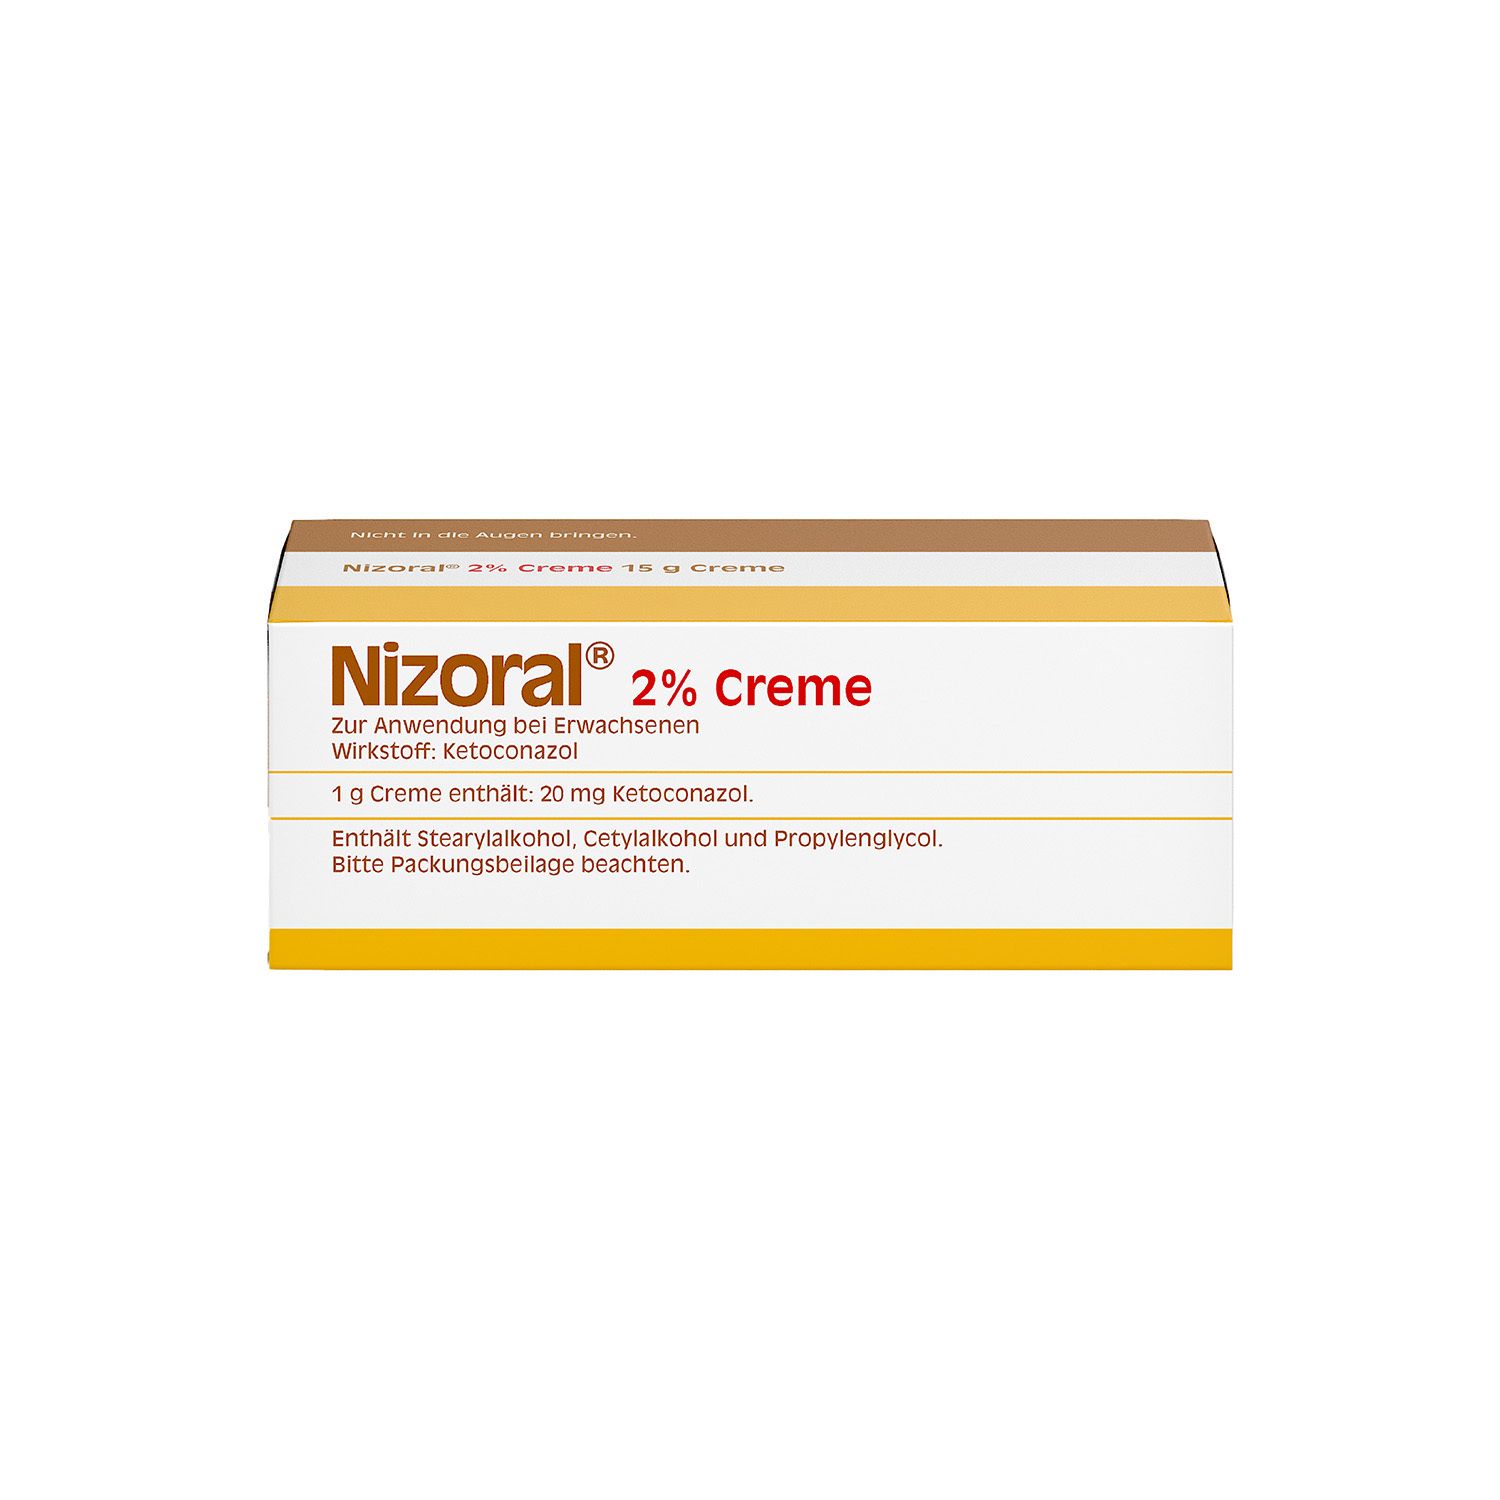 Nizoral® 2% Creme